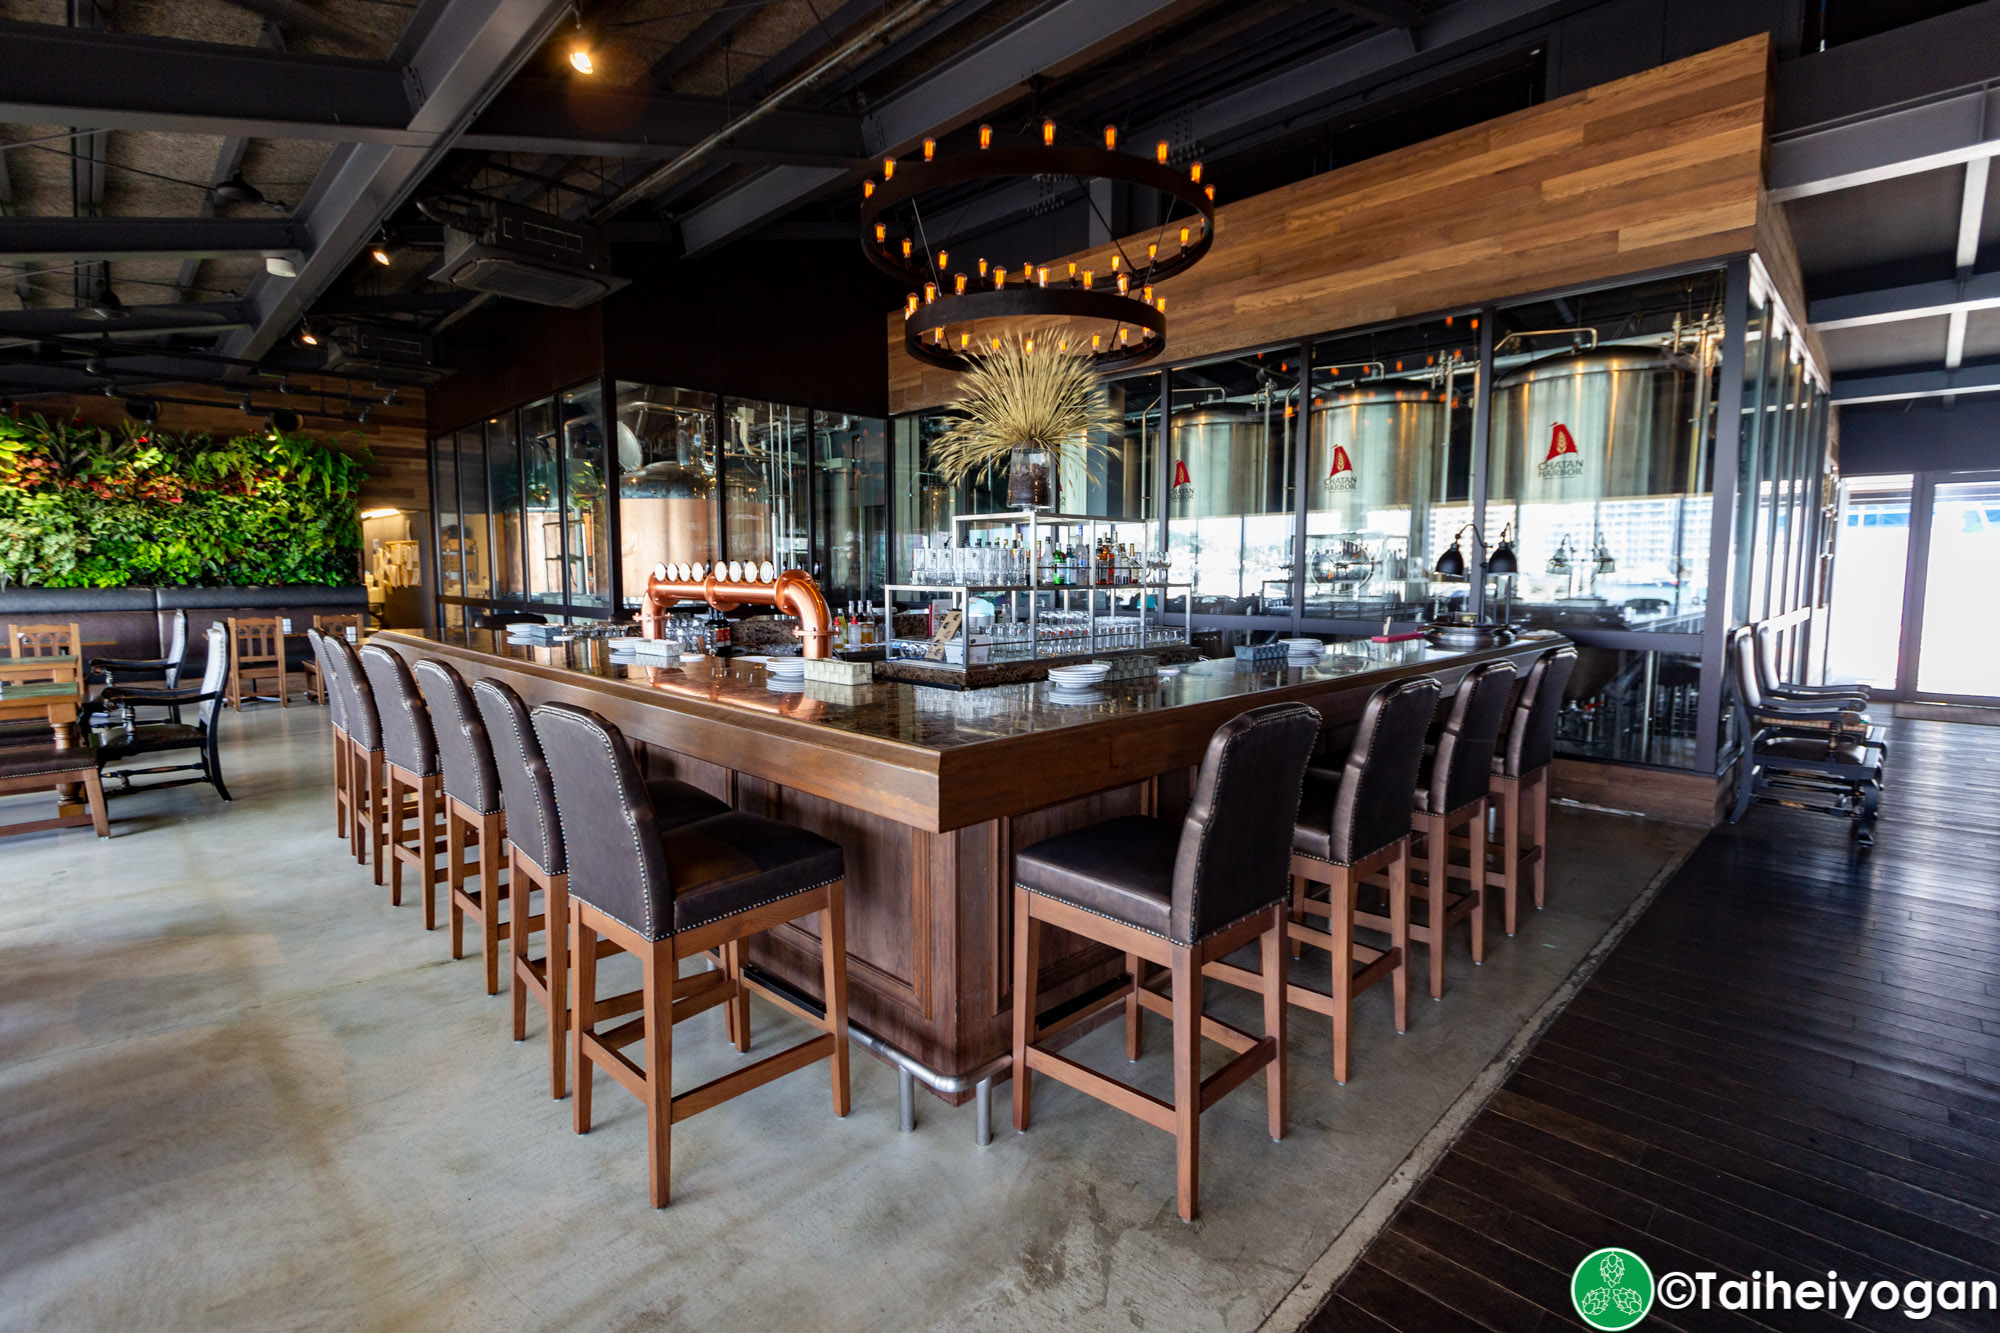 Chatan Harbor Brewery - Interior - Bar Area - Bar Counter Seating